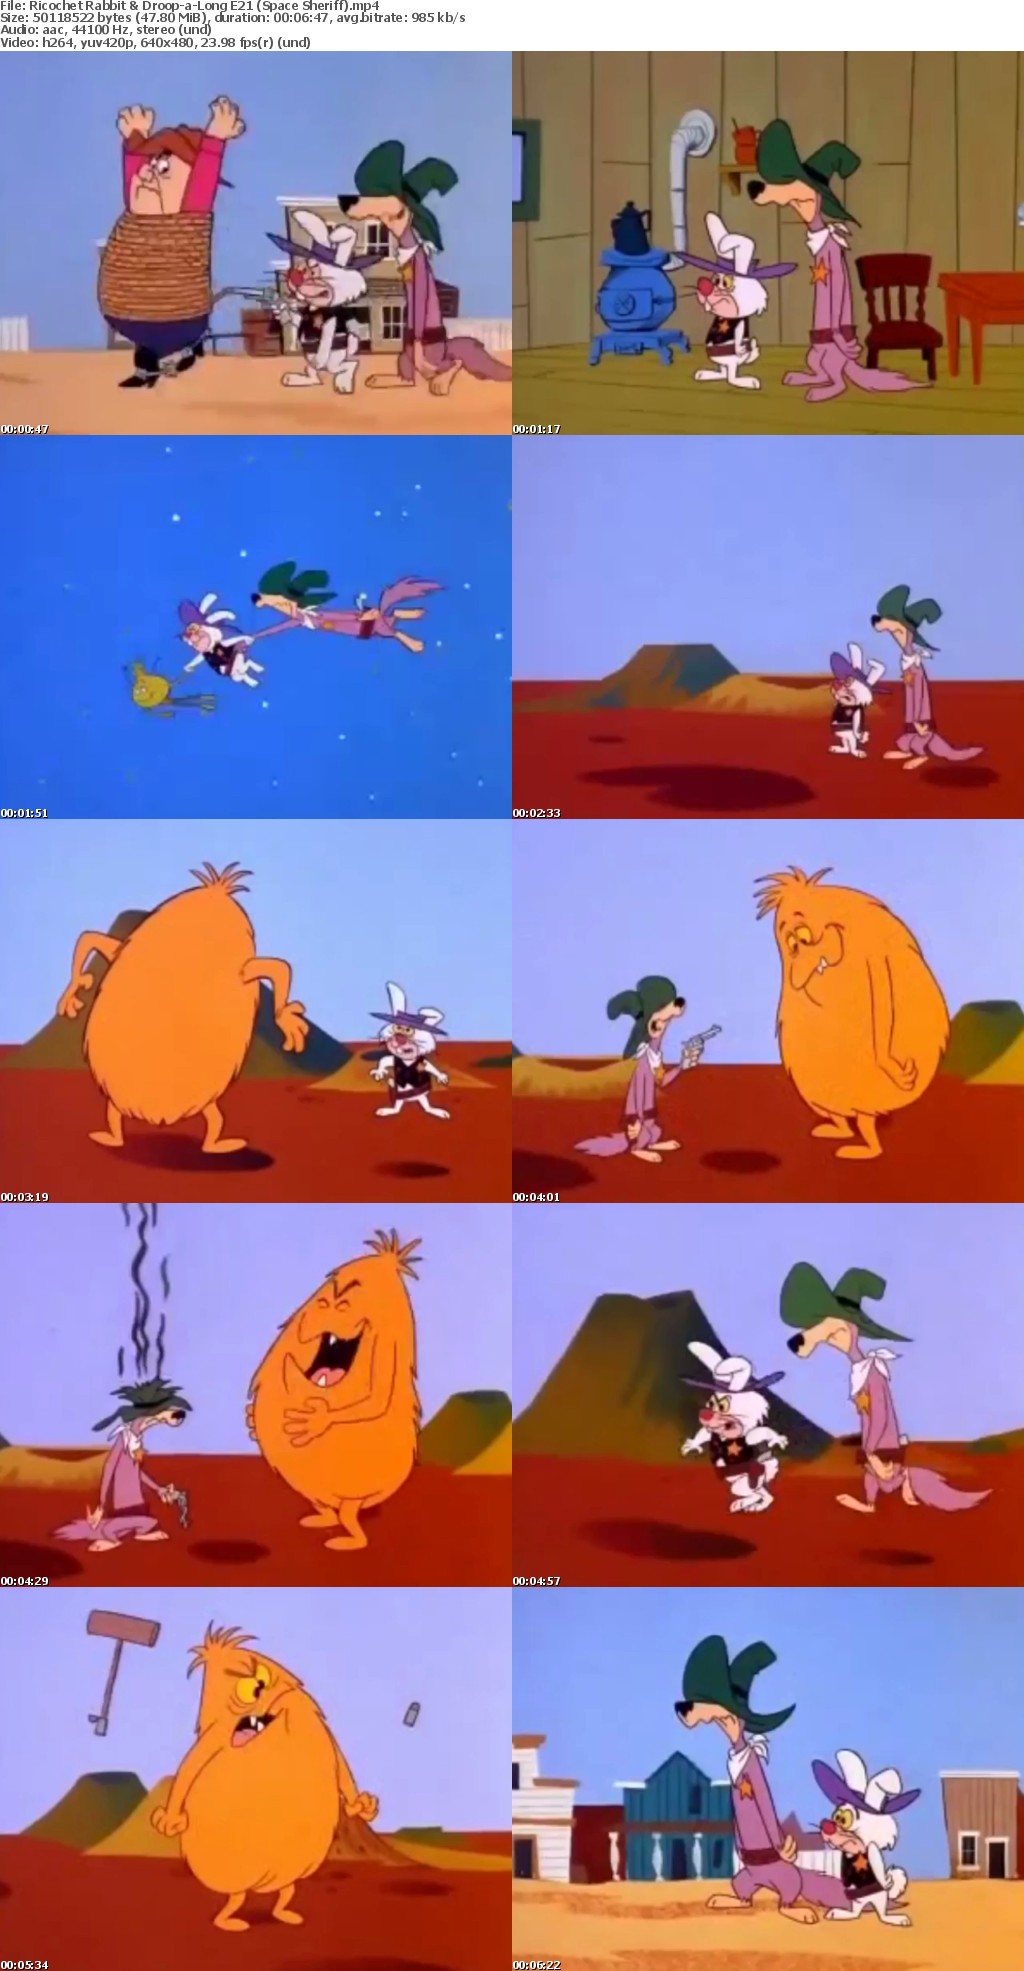 Richochet Rabbit and Droop-a-Long (cartoon series in MP4 format) Lando18